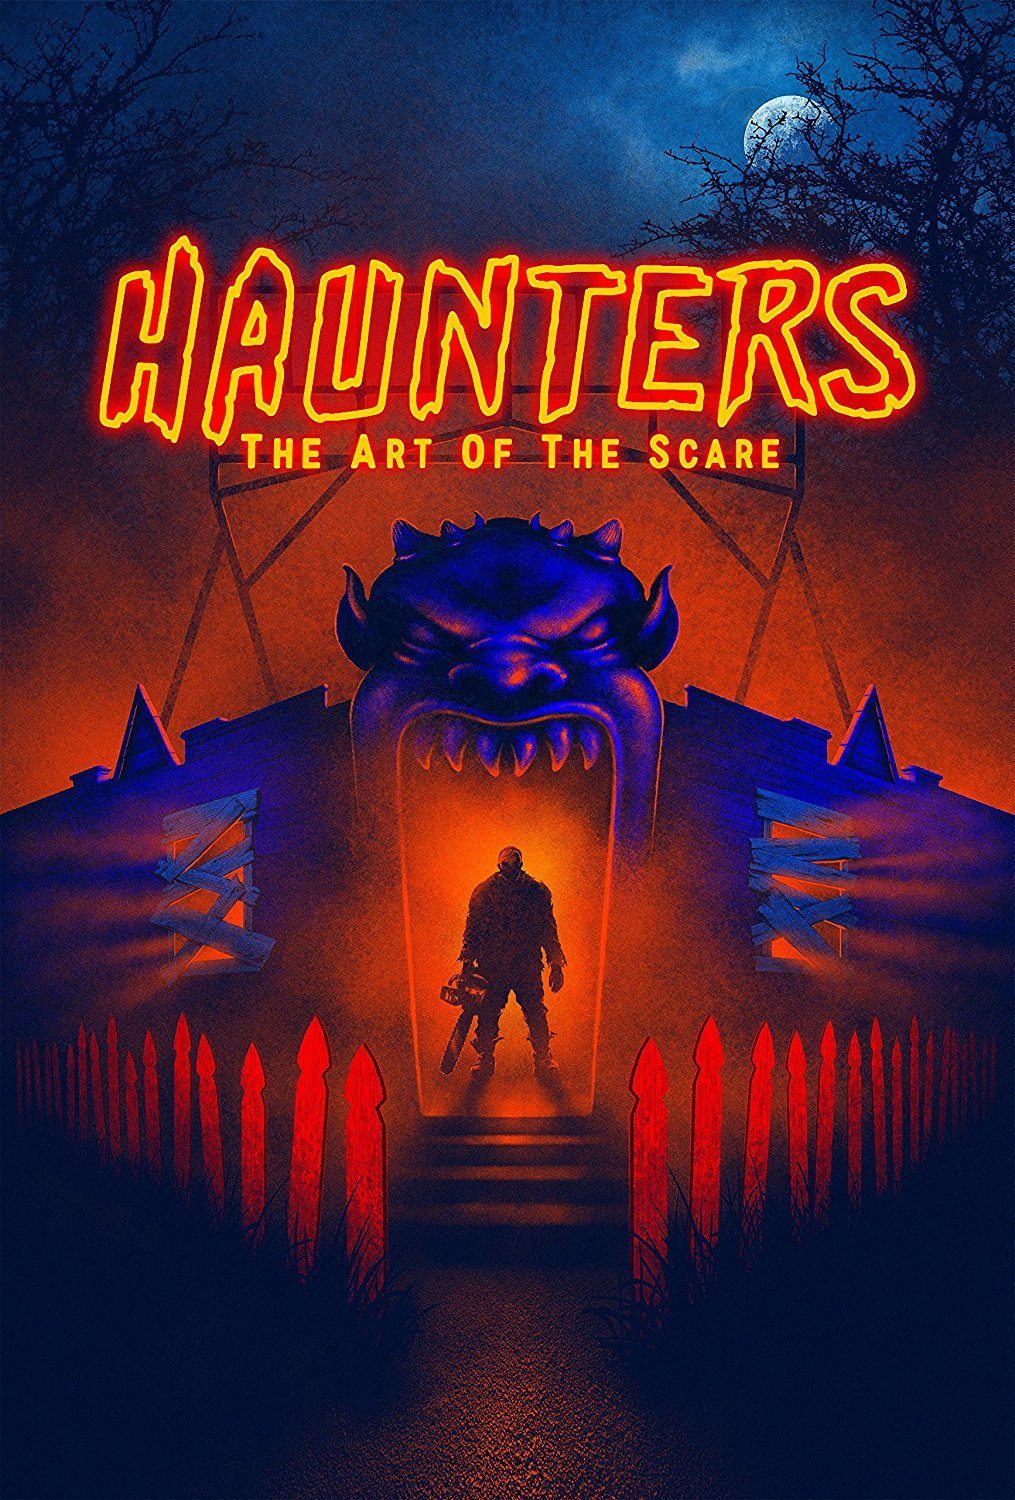 Behind the Screams #10: HAUNTERS: THE ART OF THE SCARE director Jon Schnitzer